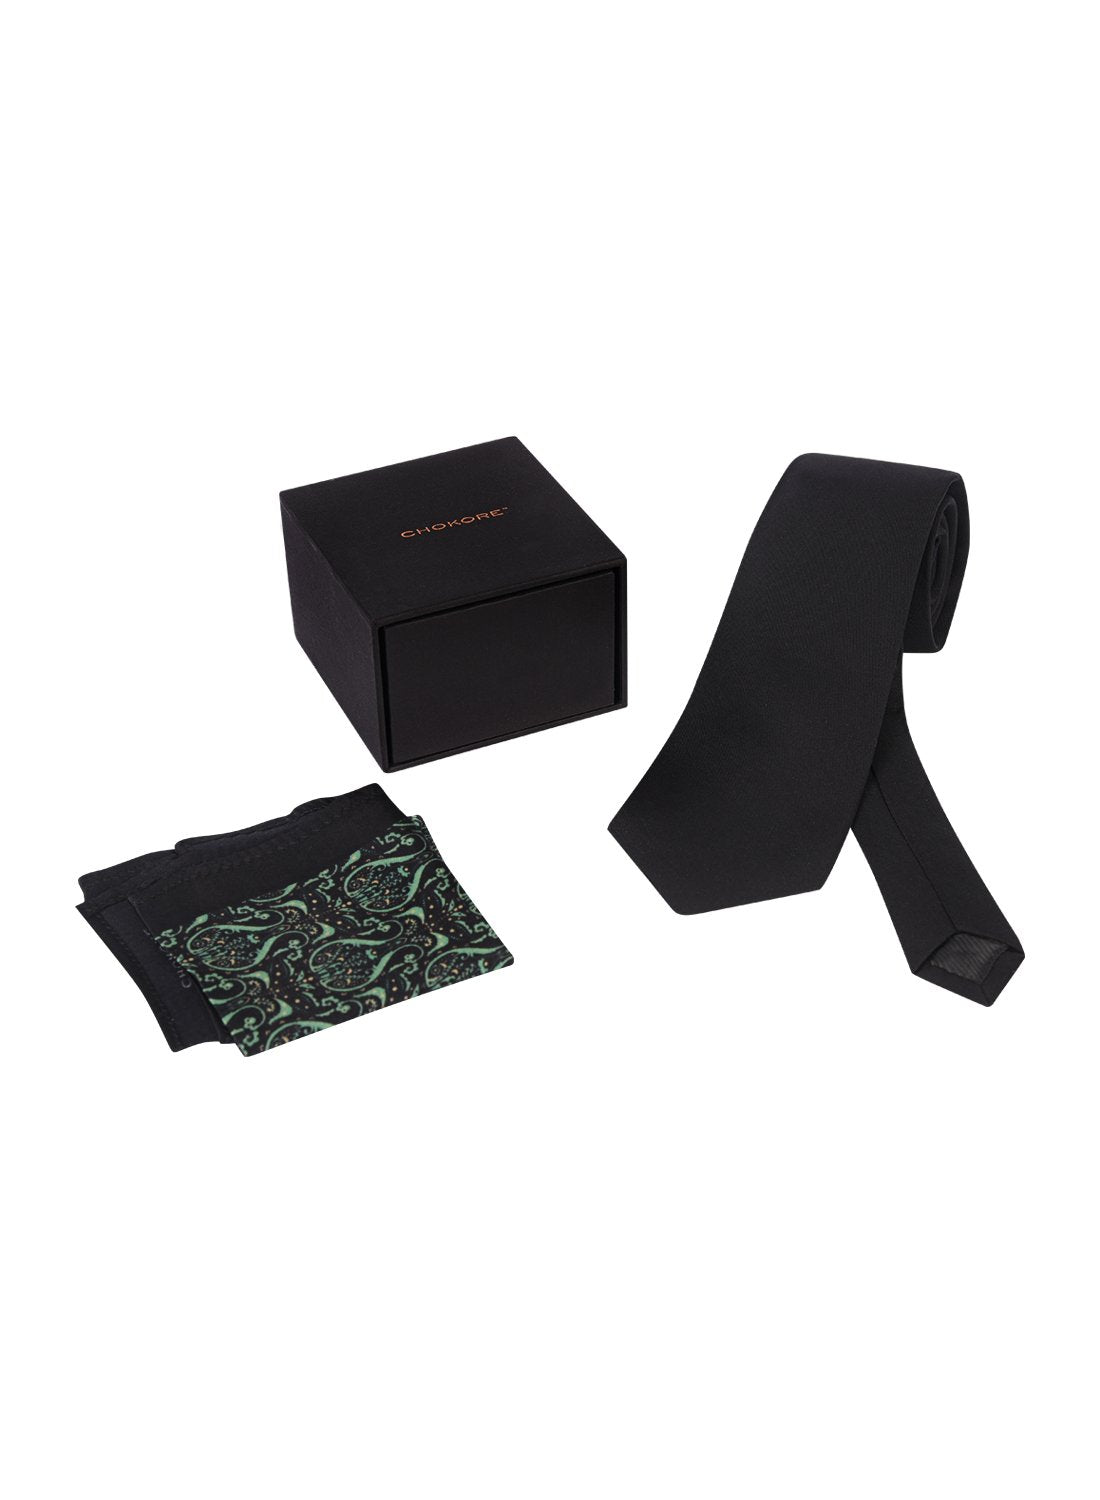 Chokore Black color Plain Silk Tie & Black & Dark Sea Green silk pocket square set